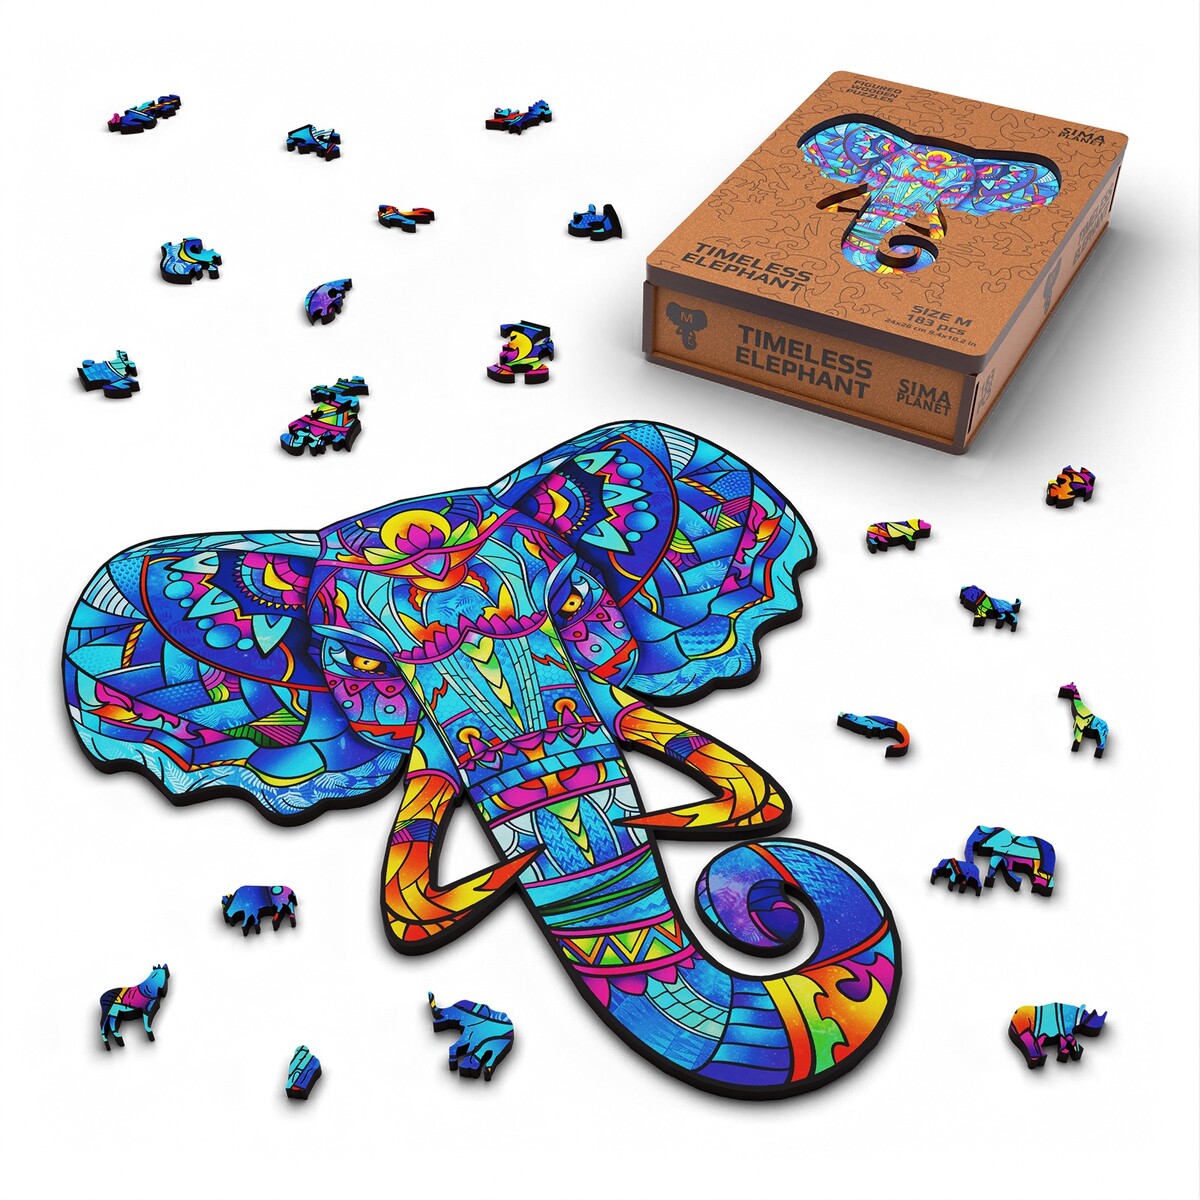 Пазл фигурный деревянный timeless elephant, размер 24х26 см, 183 детали pic n mix пазл липучка фигурки